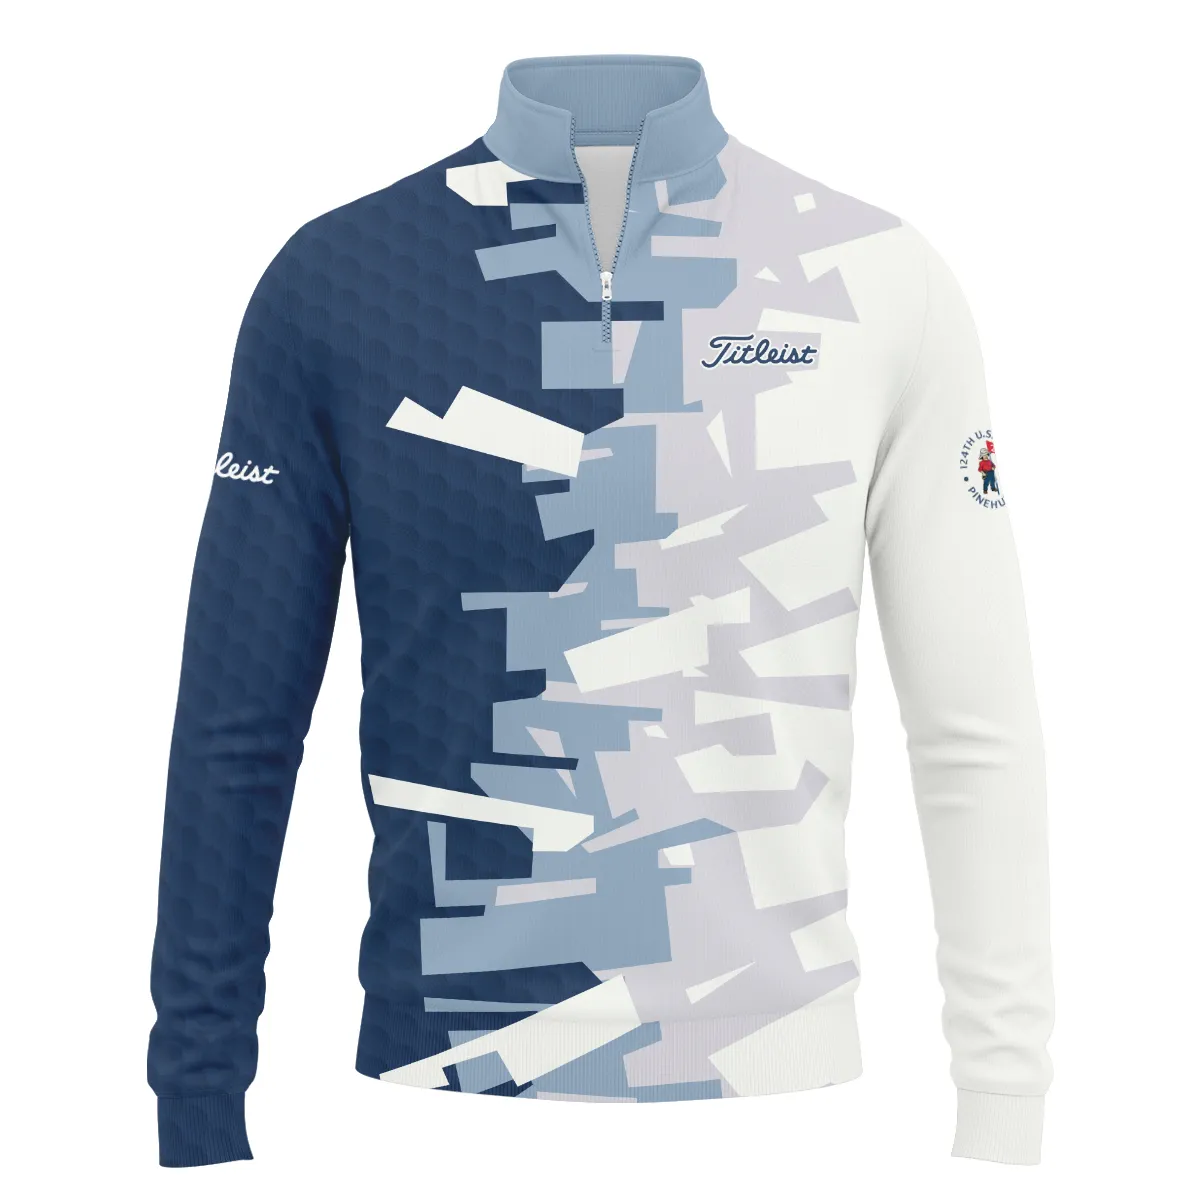 Golf Abstract Pattern 124th U.S. Open Pinehurst Titleist Polo Shirt Style Classic